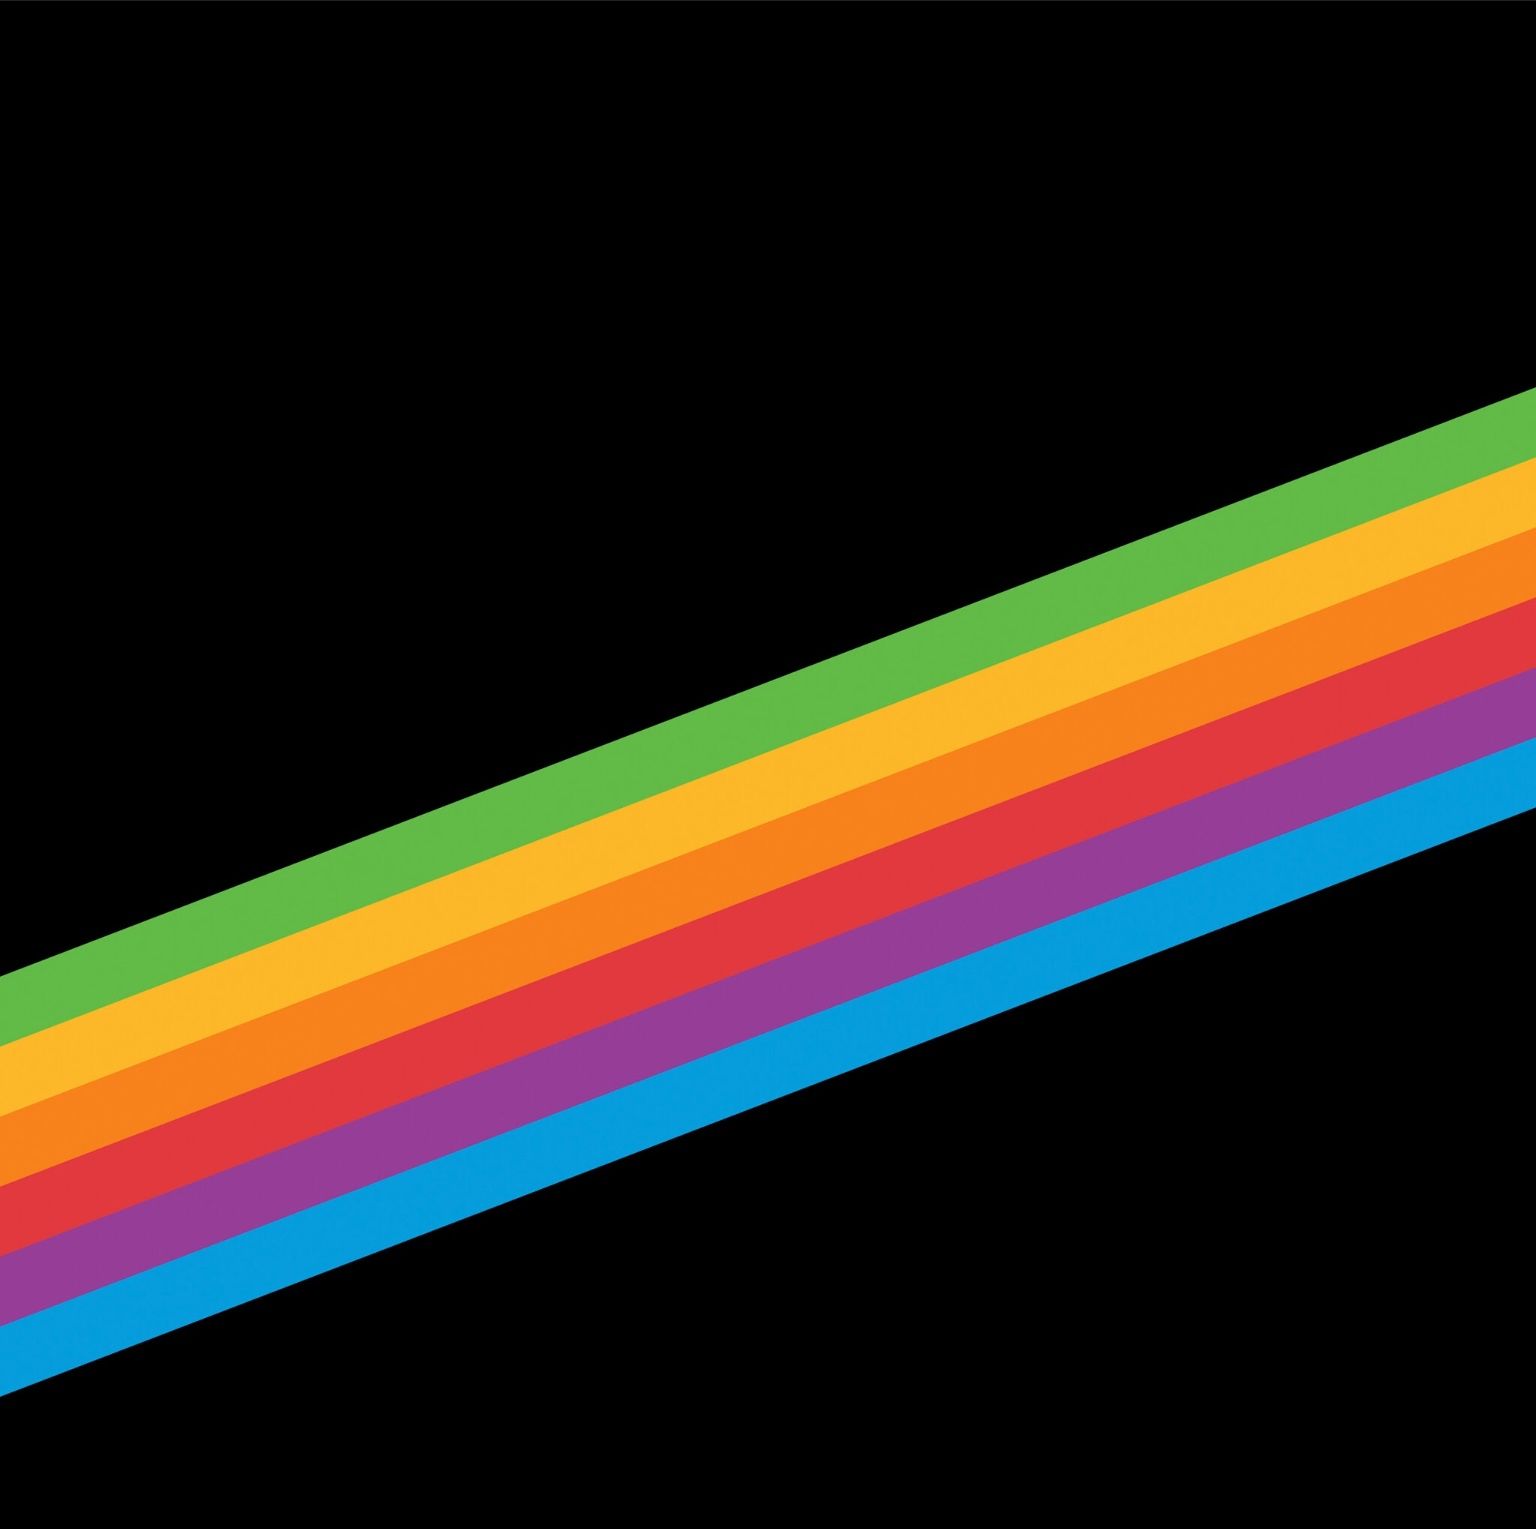 Black Rainbow Stripe. Ios 11 wallpaper, Rainbow wallpaper, Retina